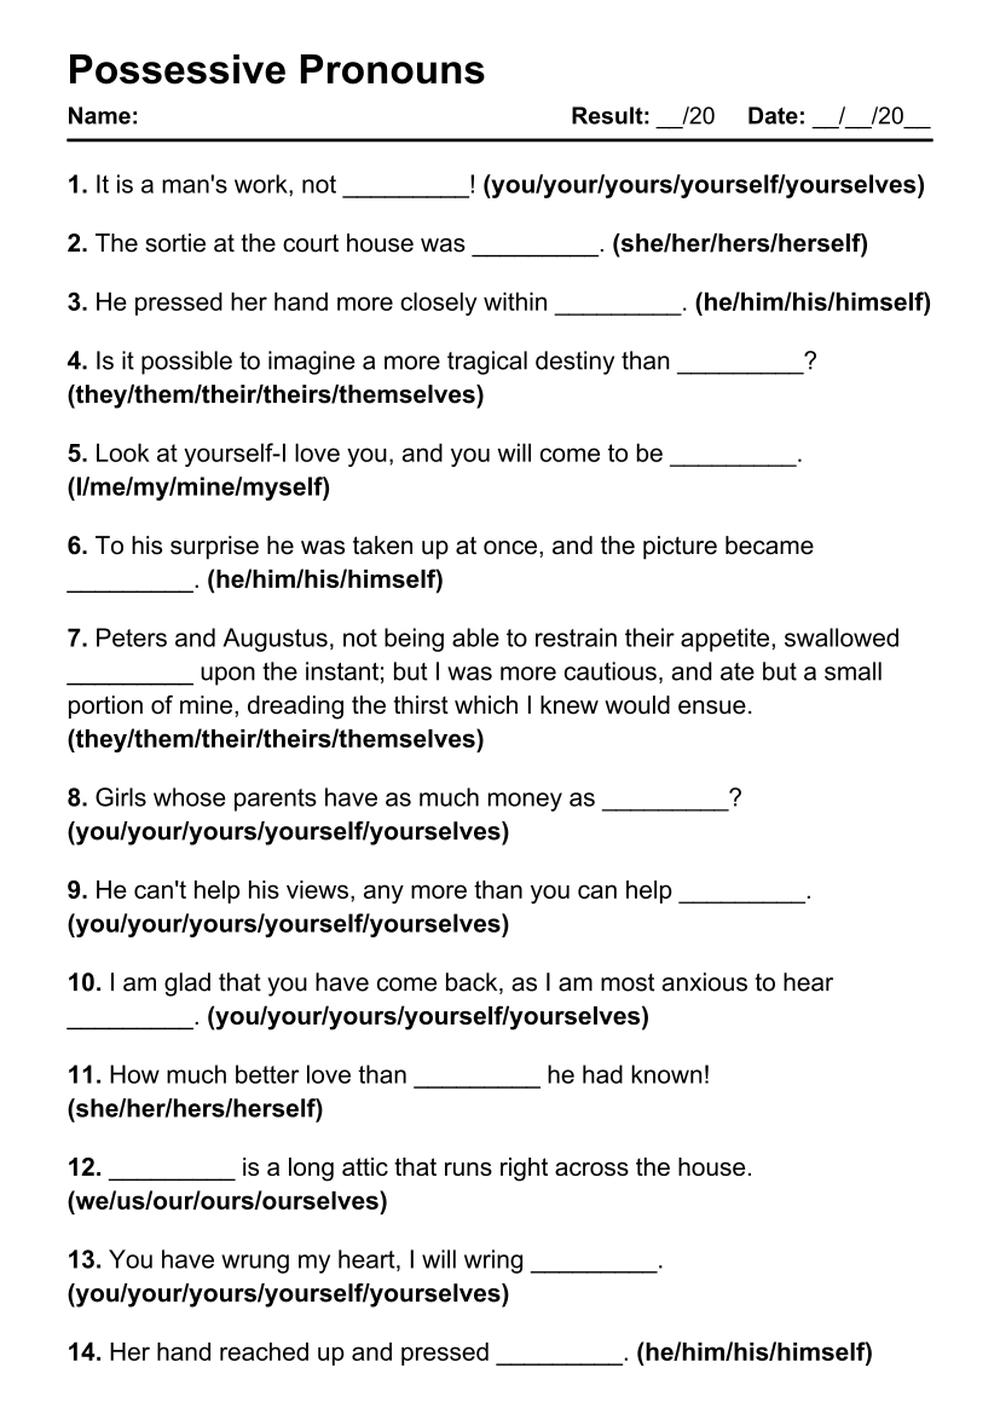 Printable Possessive Pronouns Exercises - PDF Worksheet with Answers - Test 48